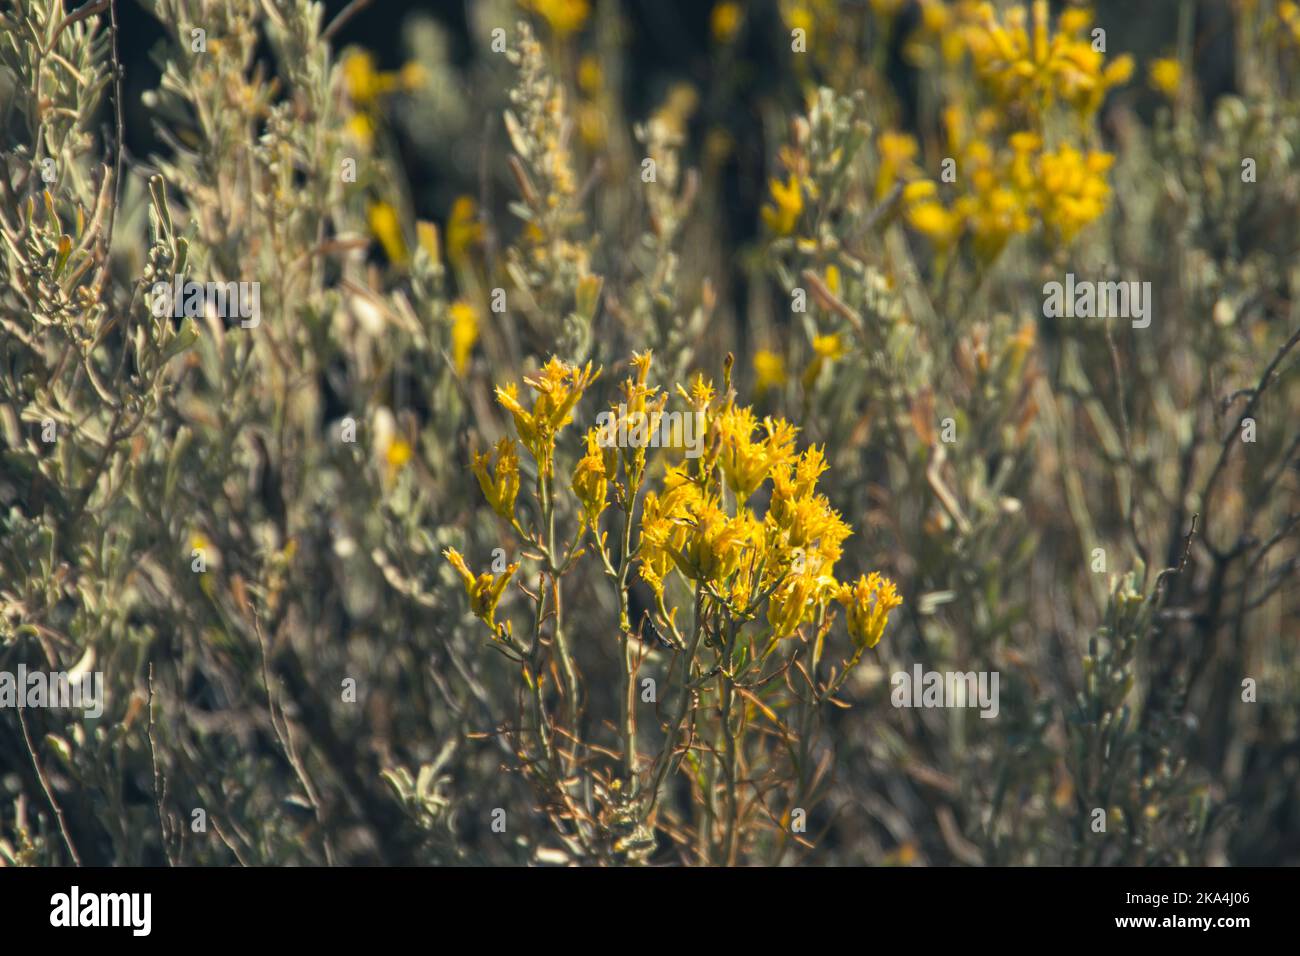 Desert or arid wildflower plaints, growing in the harsh landscape and lovelying lit by the sunshine. Stock Photo